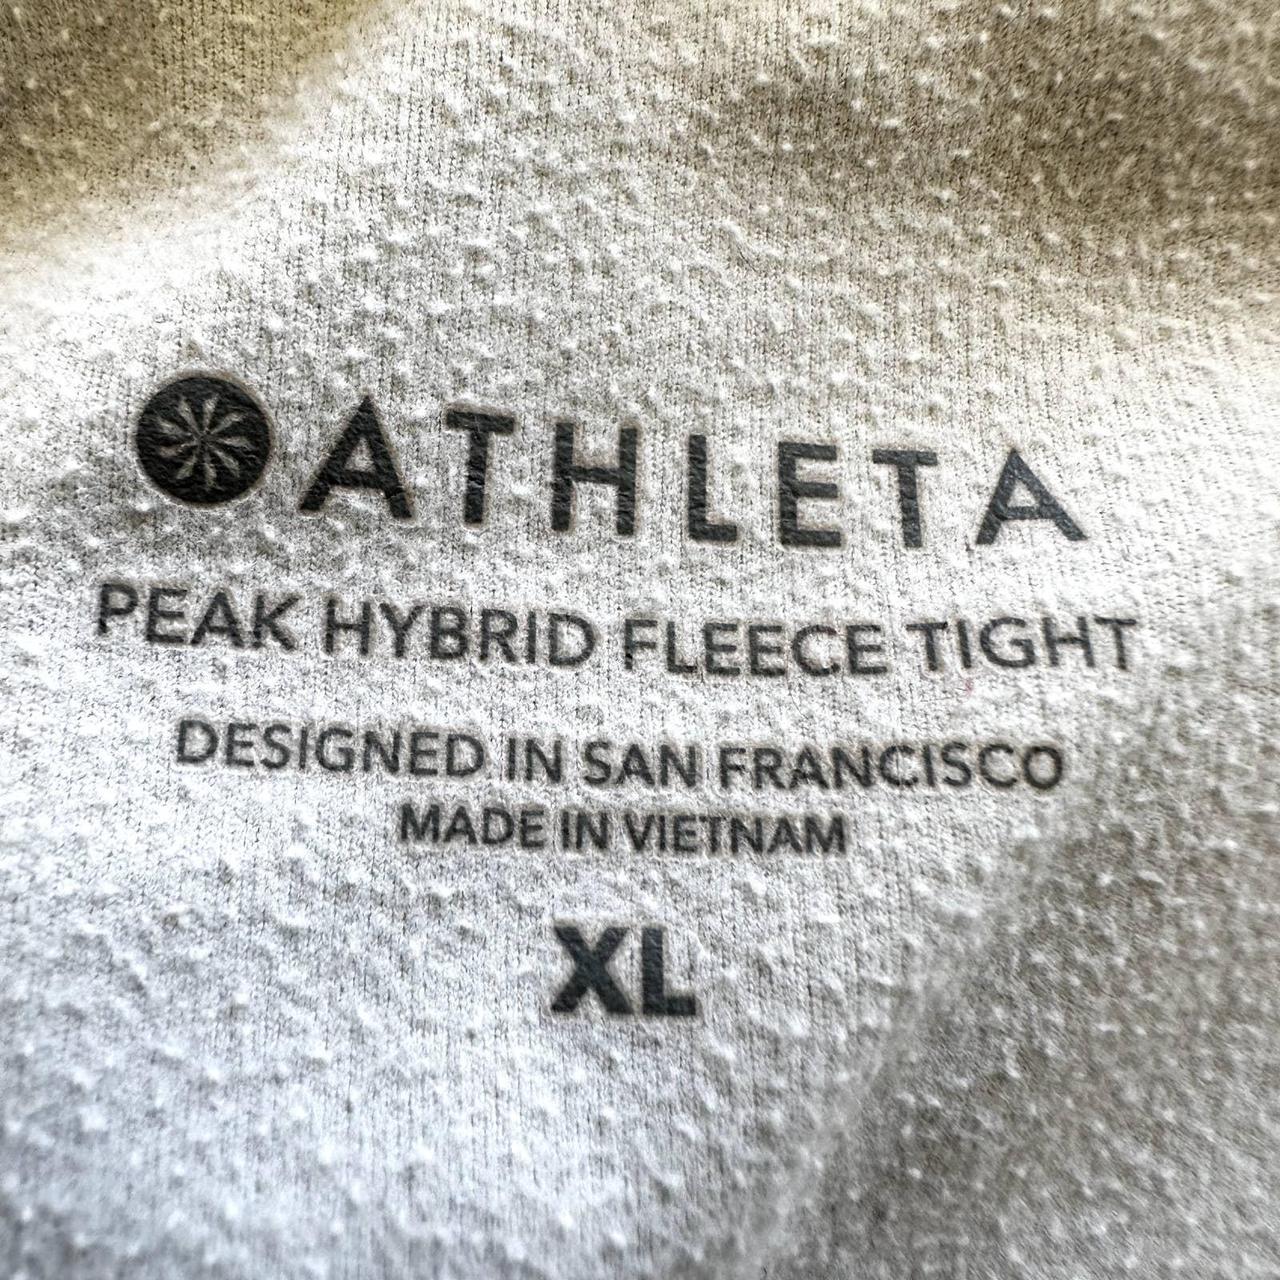 Peak Hybrid Fleece Tight